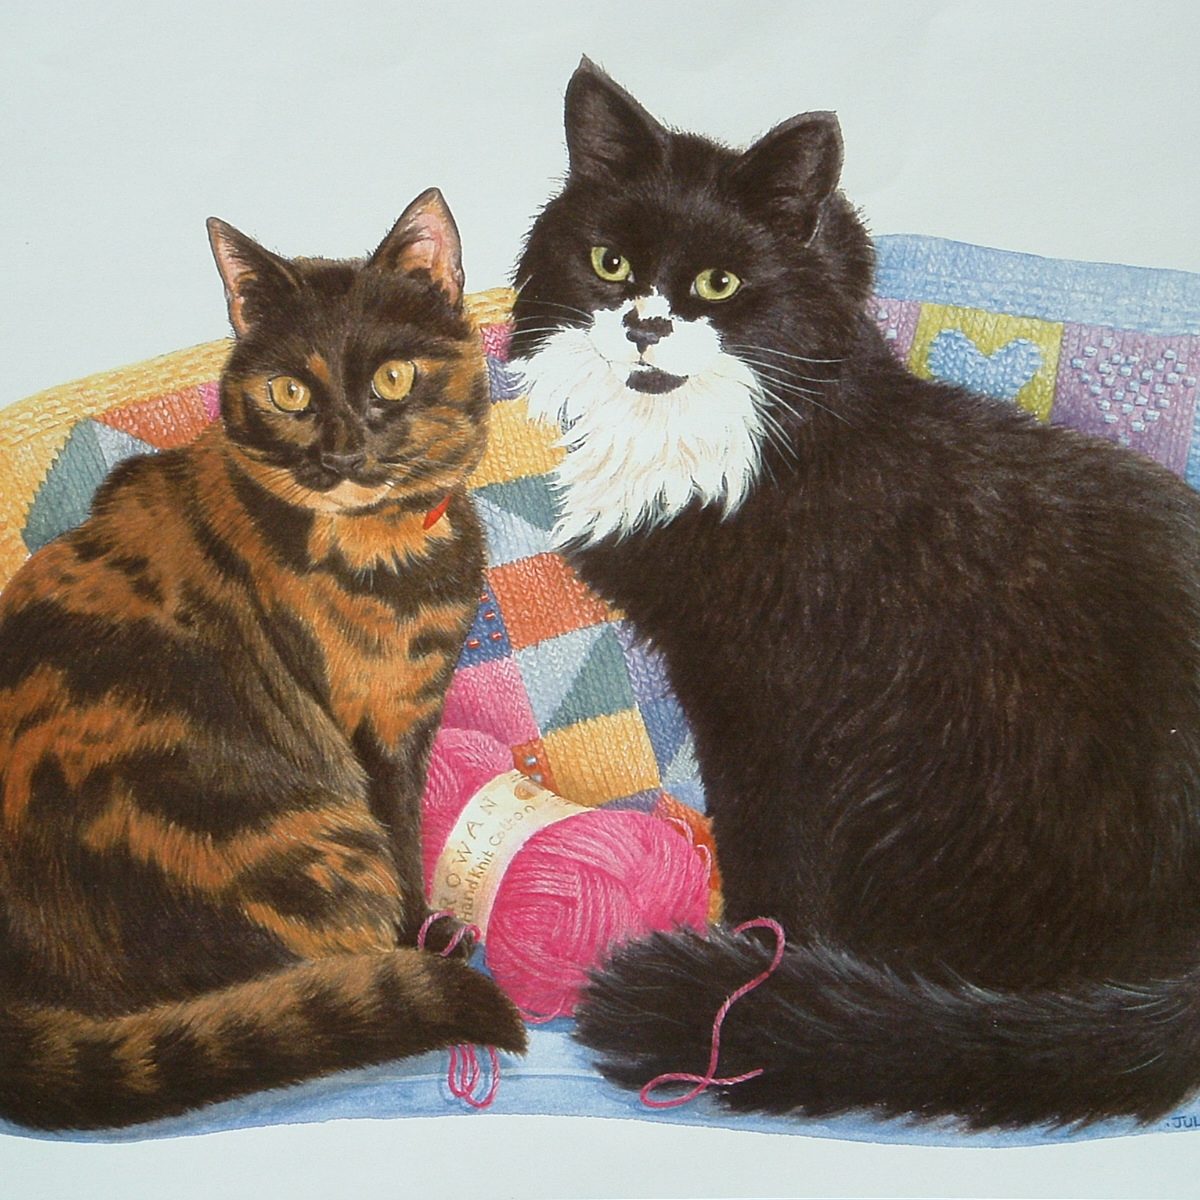 2 Jacob and Marcia Tortoiseshell cat and Black and White